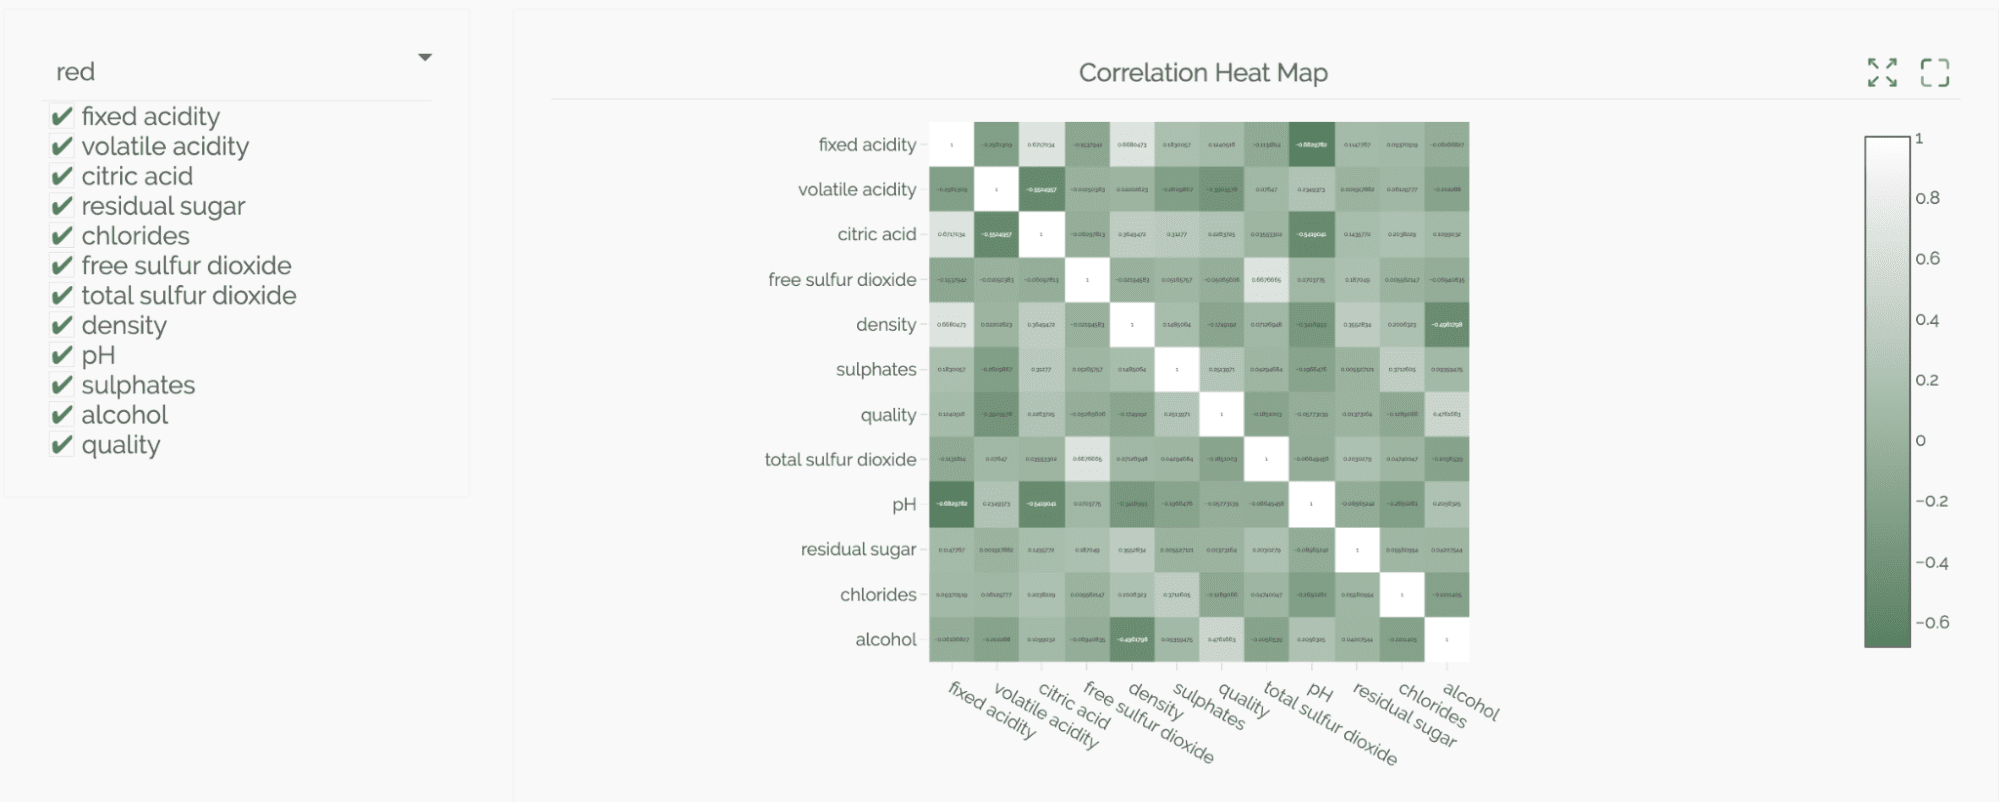 Correlation Heat Map